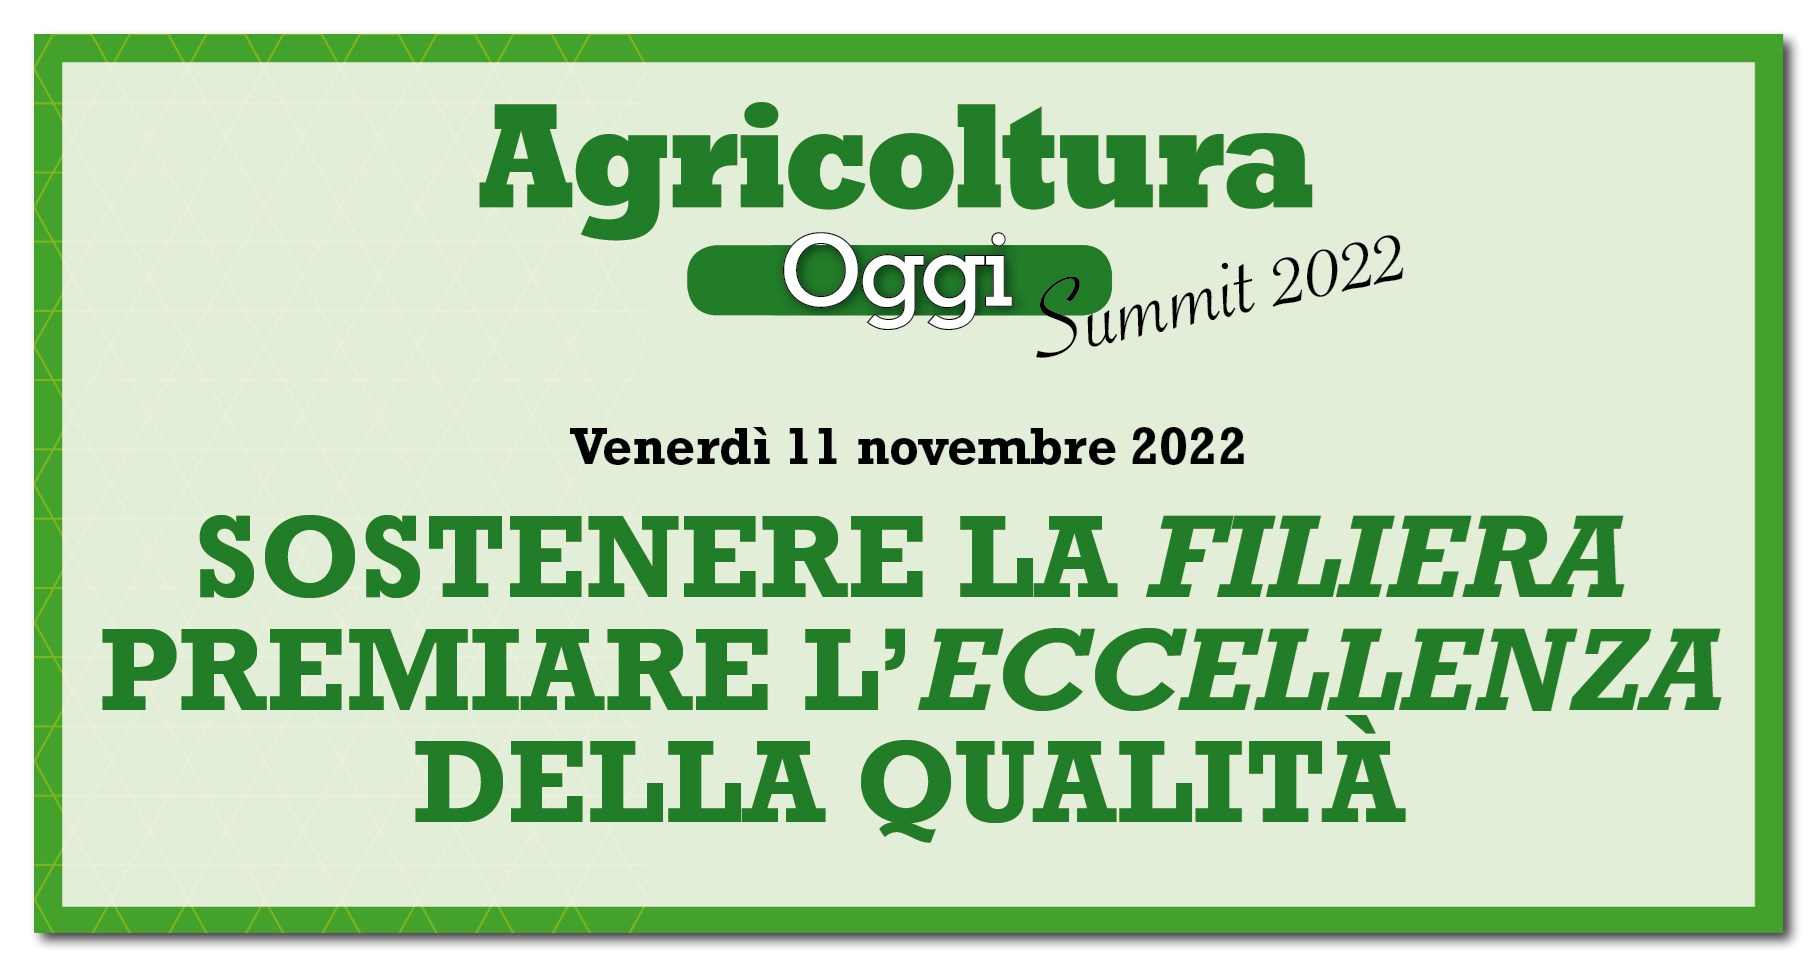 AgricolturaOggi Summit 2022